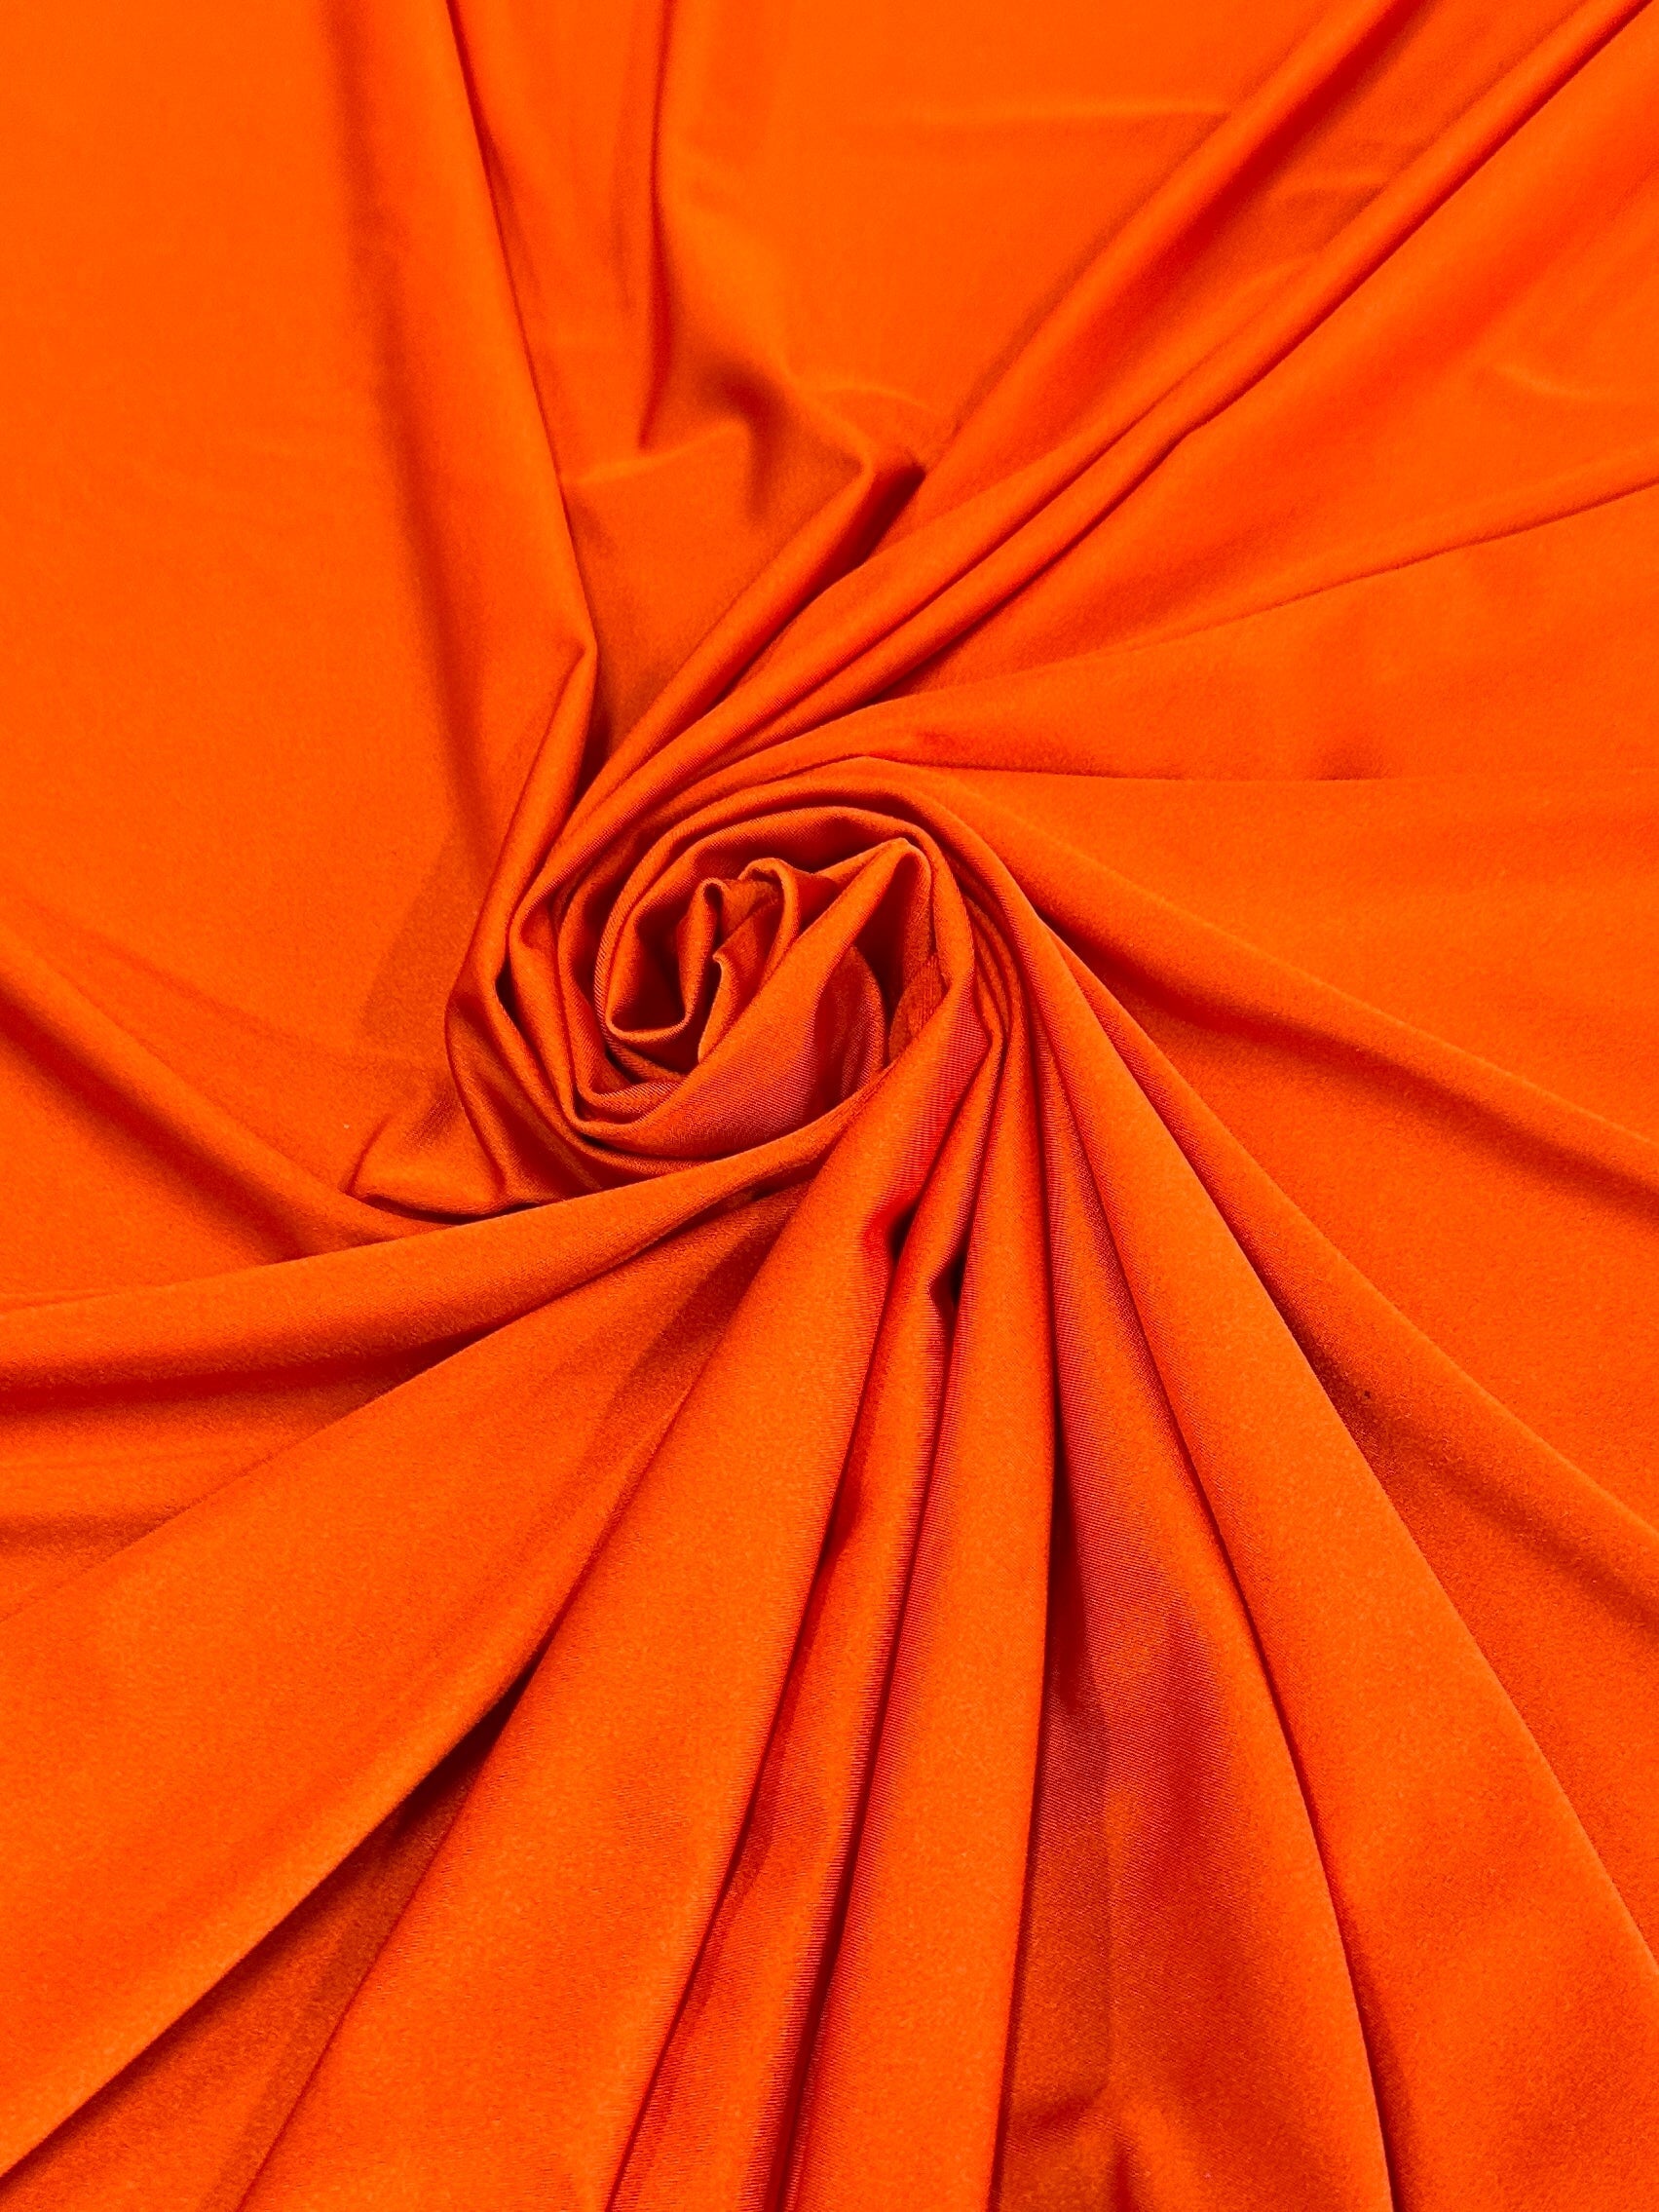 Orange Yoga Spandex, pale orange Yoga Spandex, burnt orange Yoga Spandex, light orange Yoga Spandex, dark orange Yoga Spandex, Yoga Spandex on sale, Yoga Spandex for woman, Yoga Spandex for bride, Yoga Spandex on discount, premium Yoga Spandex